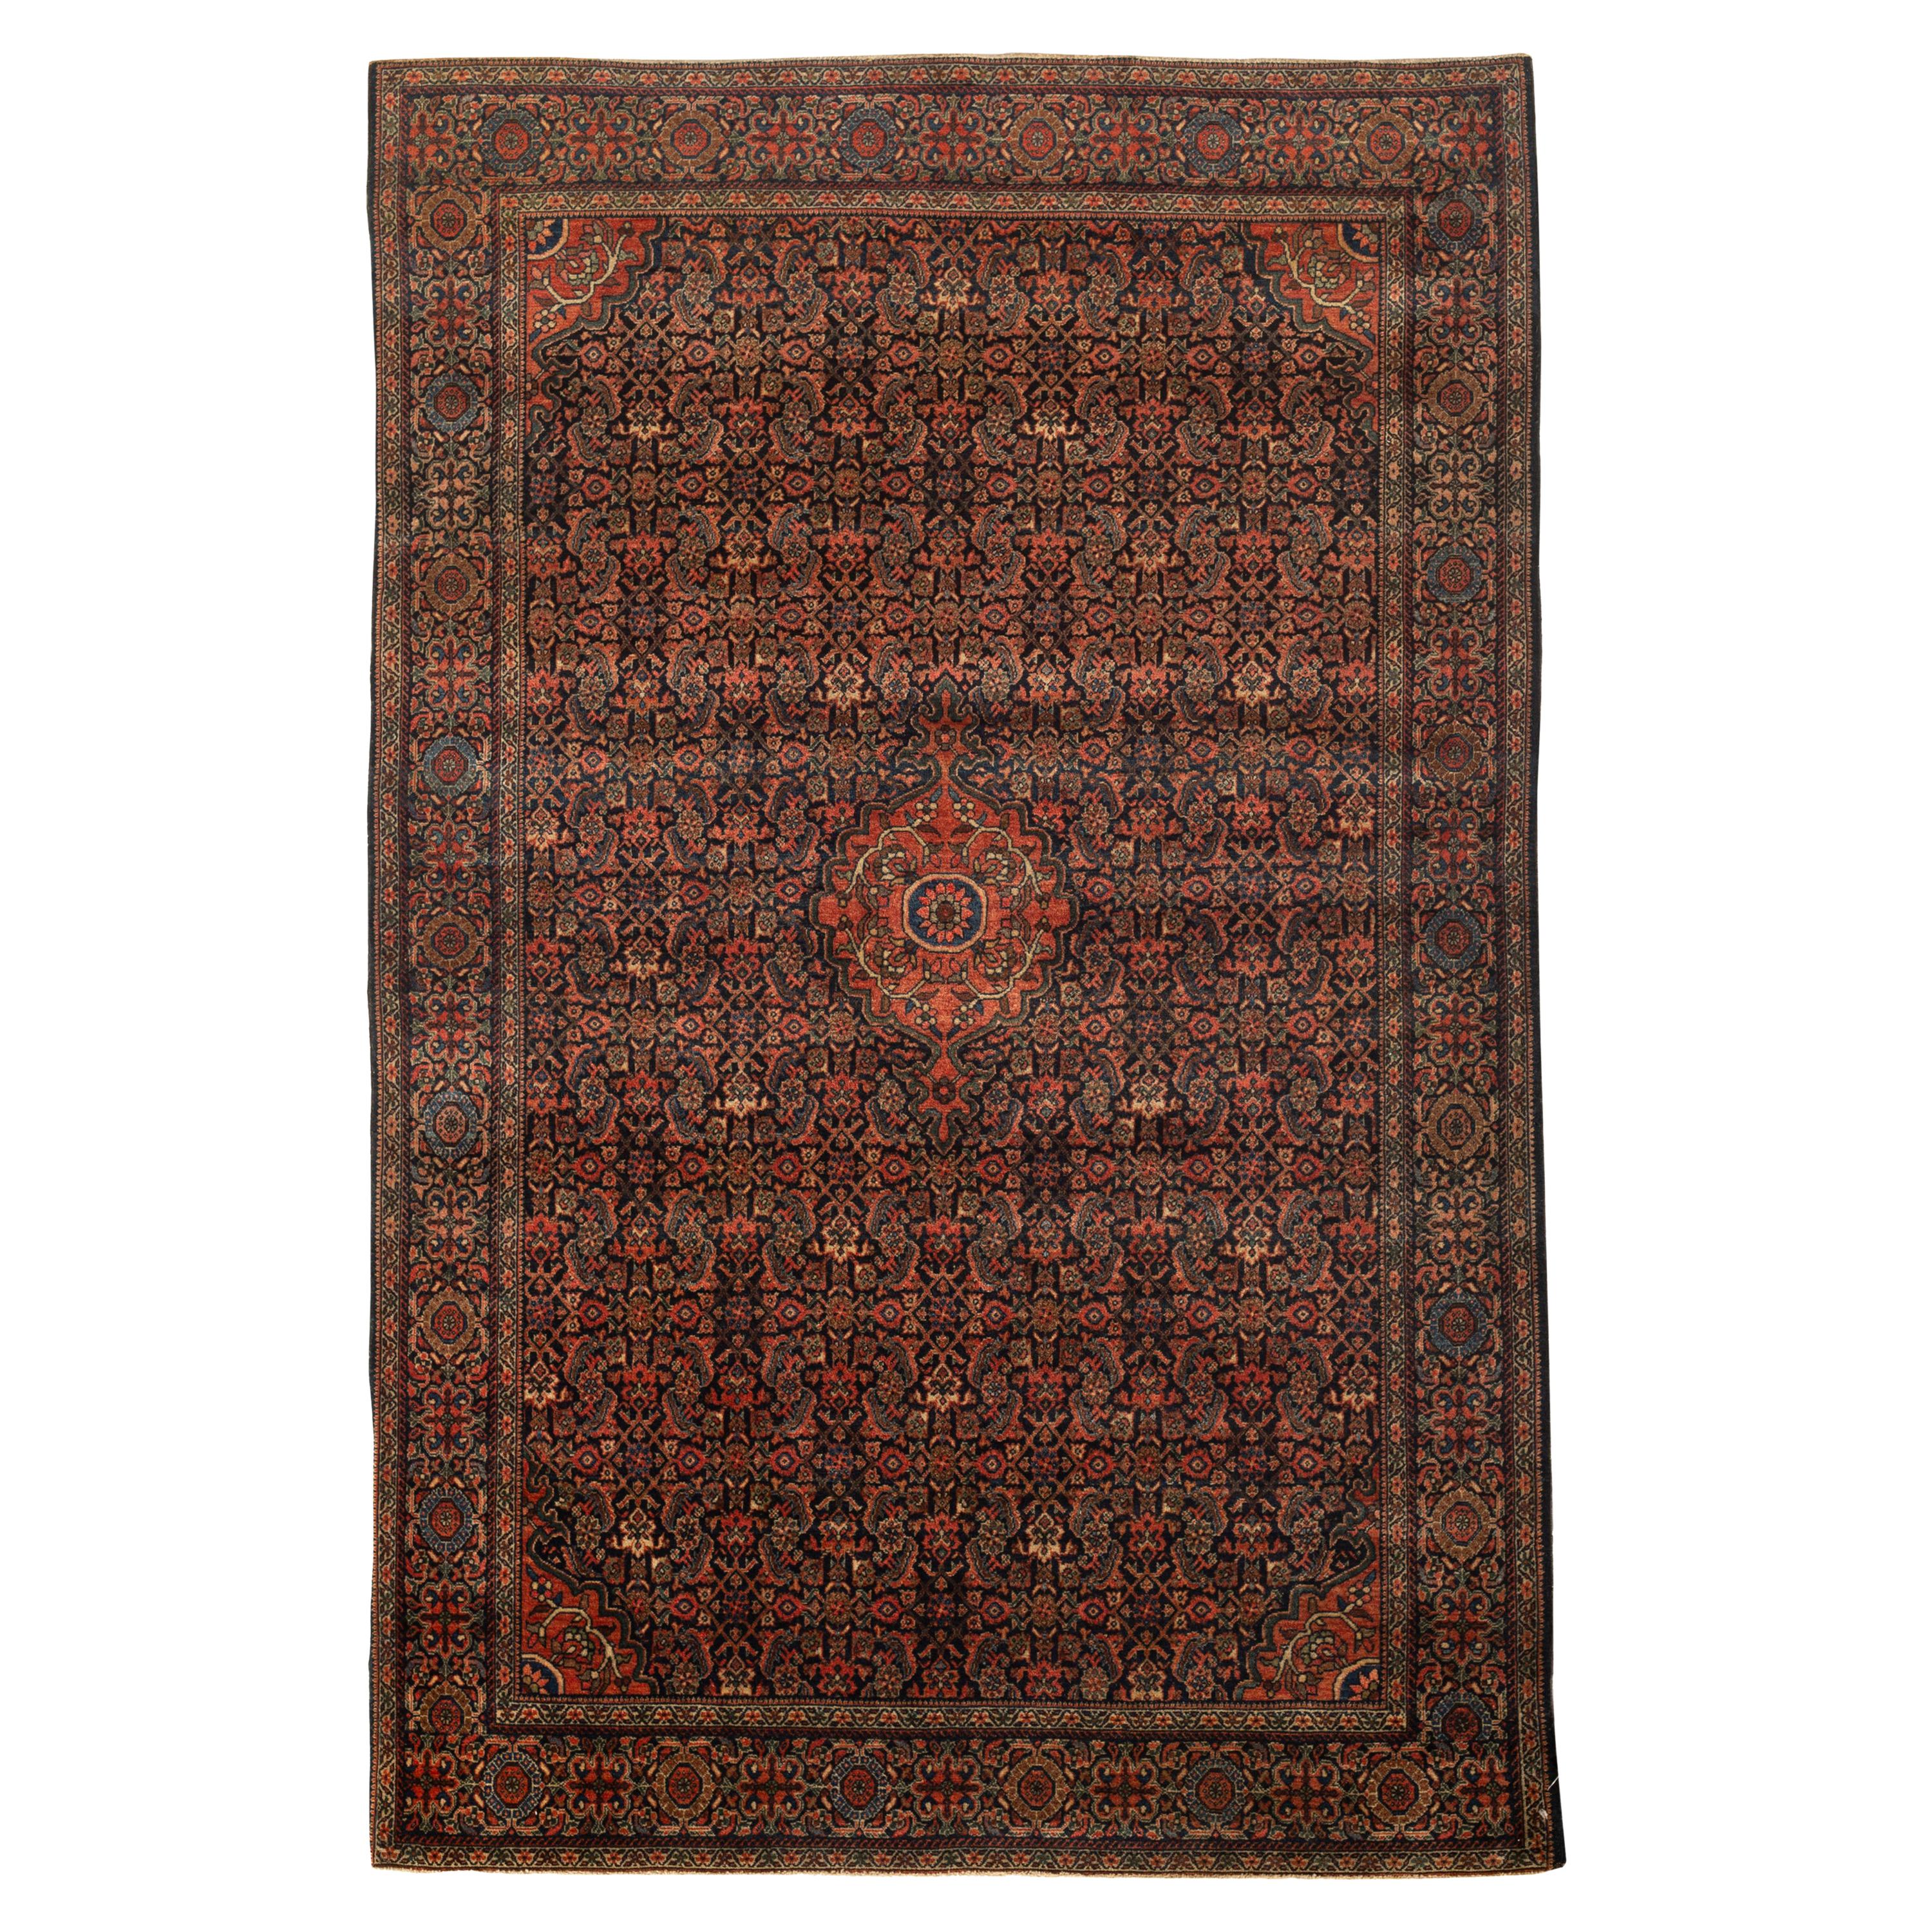 Antiker persischer Farahan-S Sarouk-Teppich, um 1880